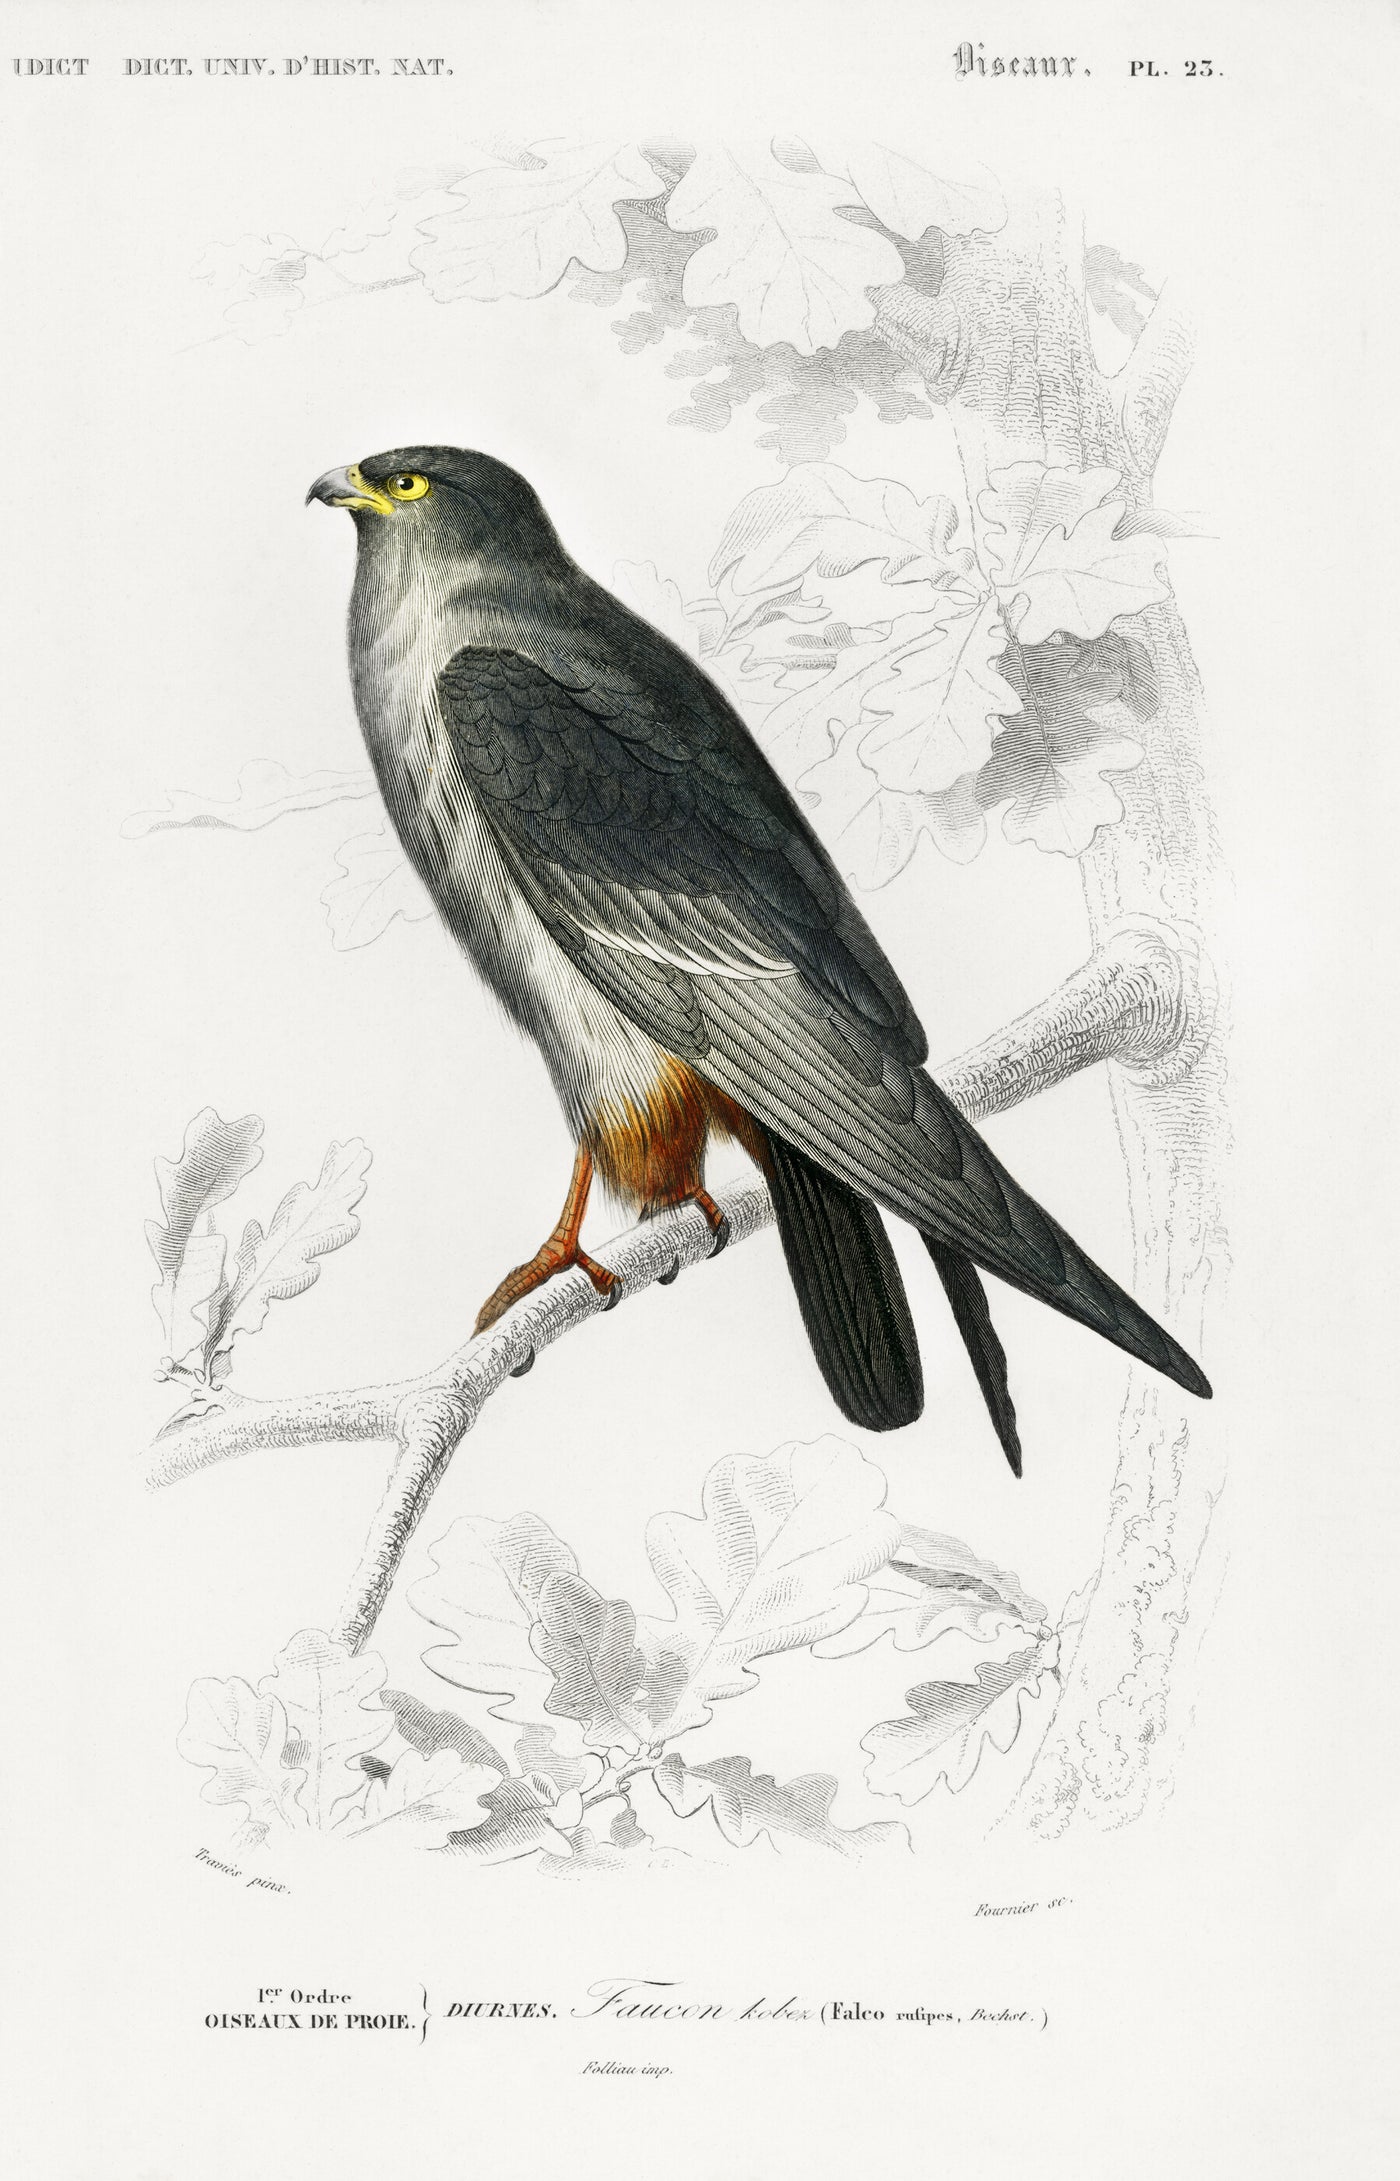 Rotfußfalke (Falco rufipes) illustriert von Charles Dessalines D' Orbigny